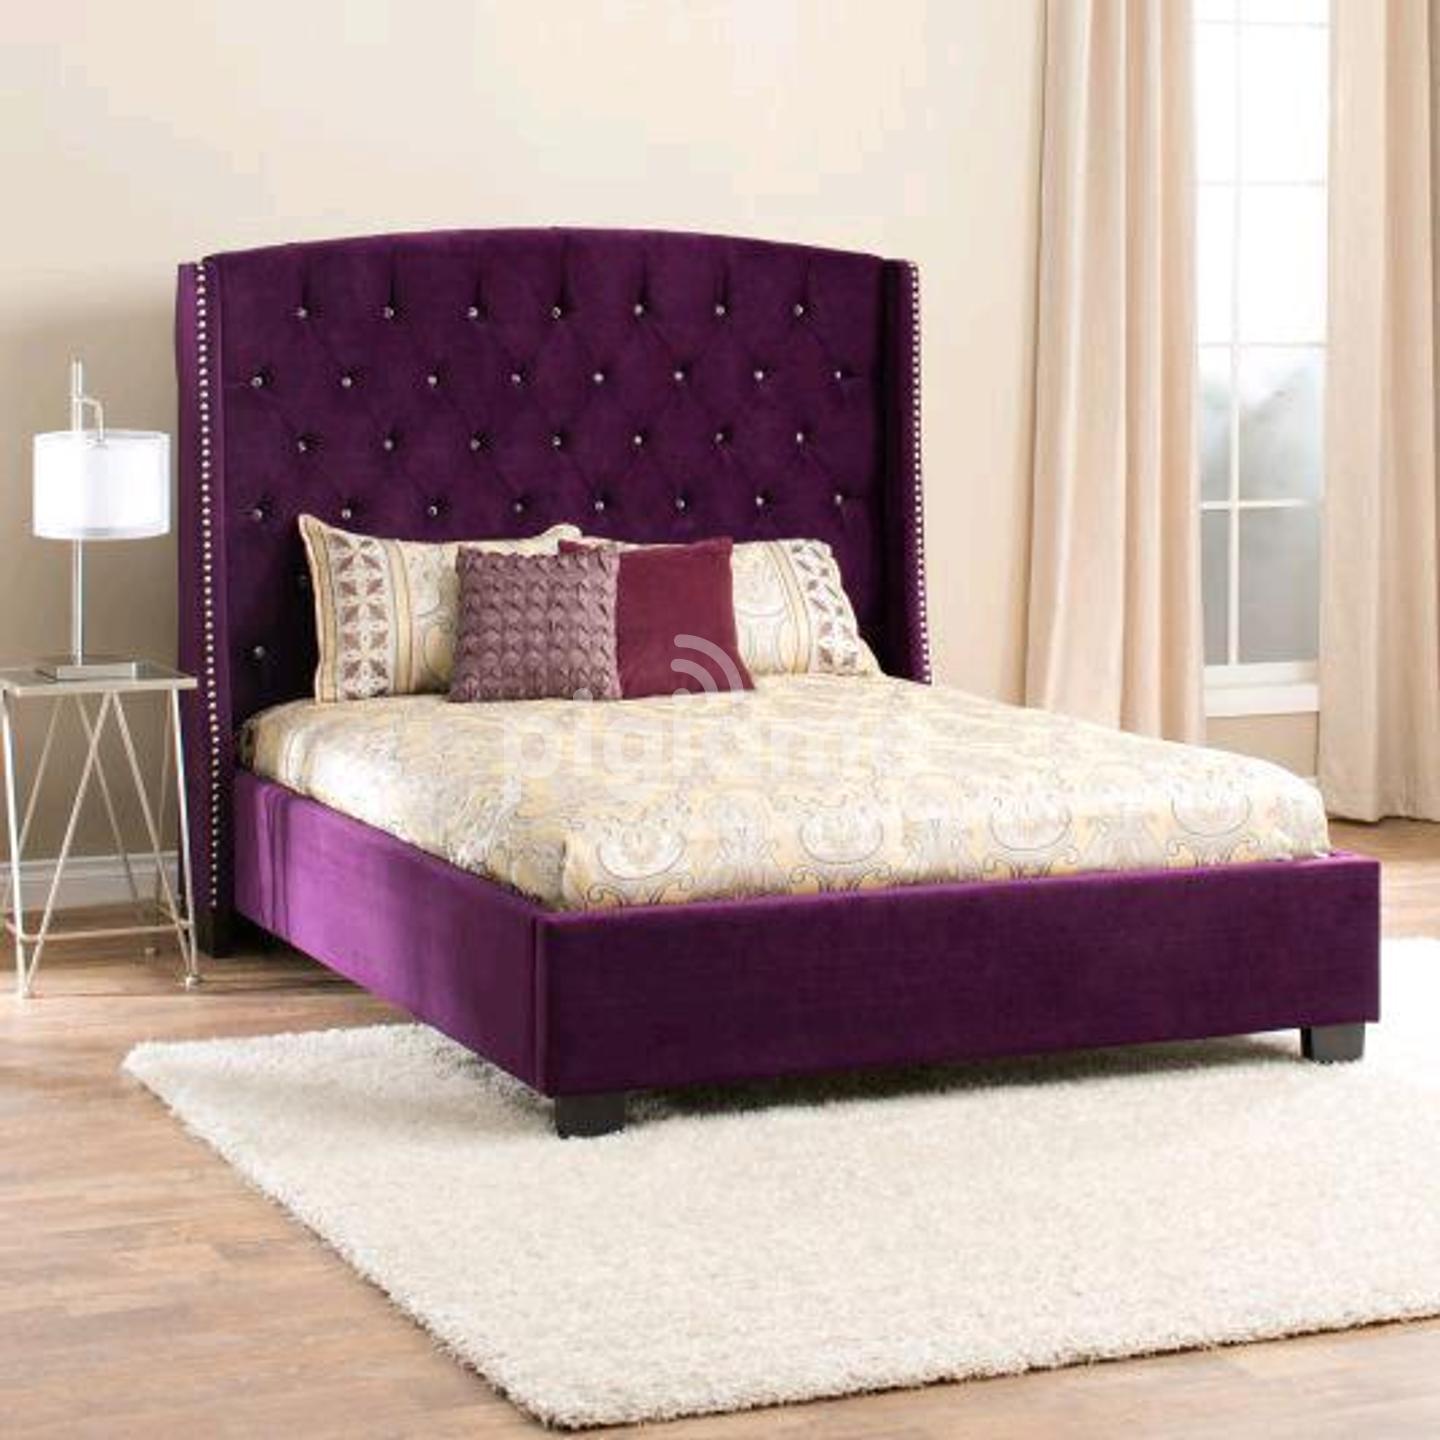 Kingsize Beds For In Nairobi Kenya, Purple King Size Bed